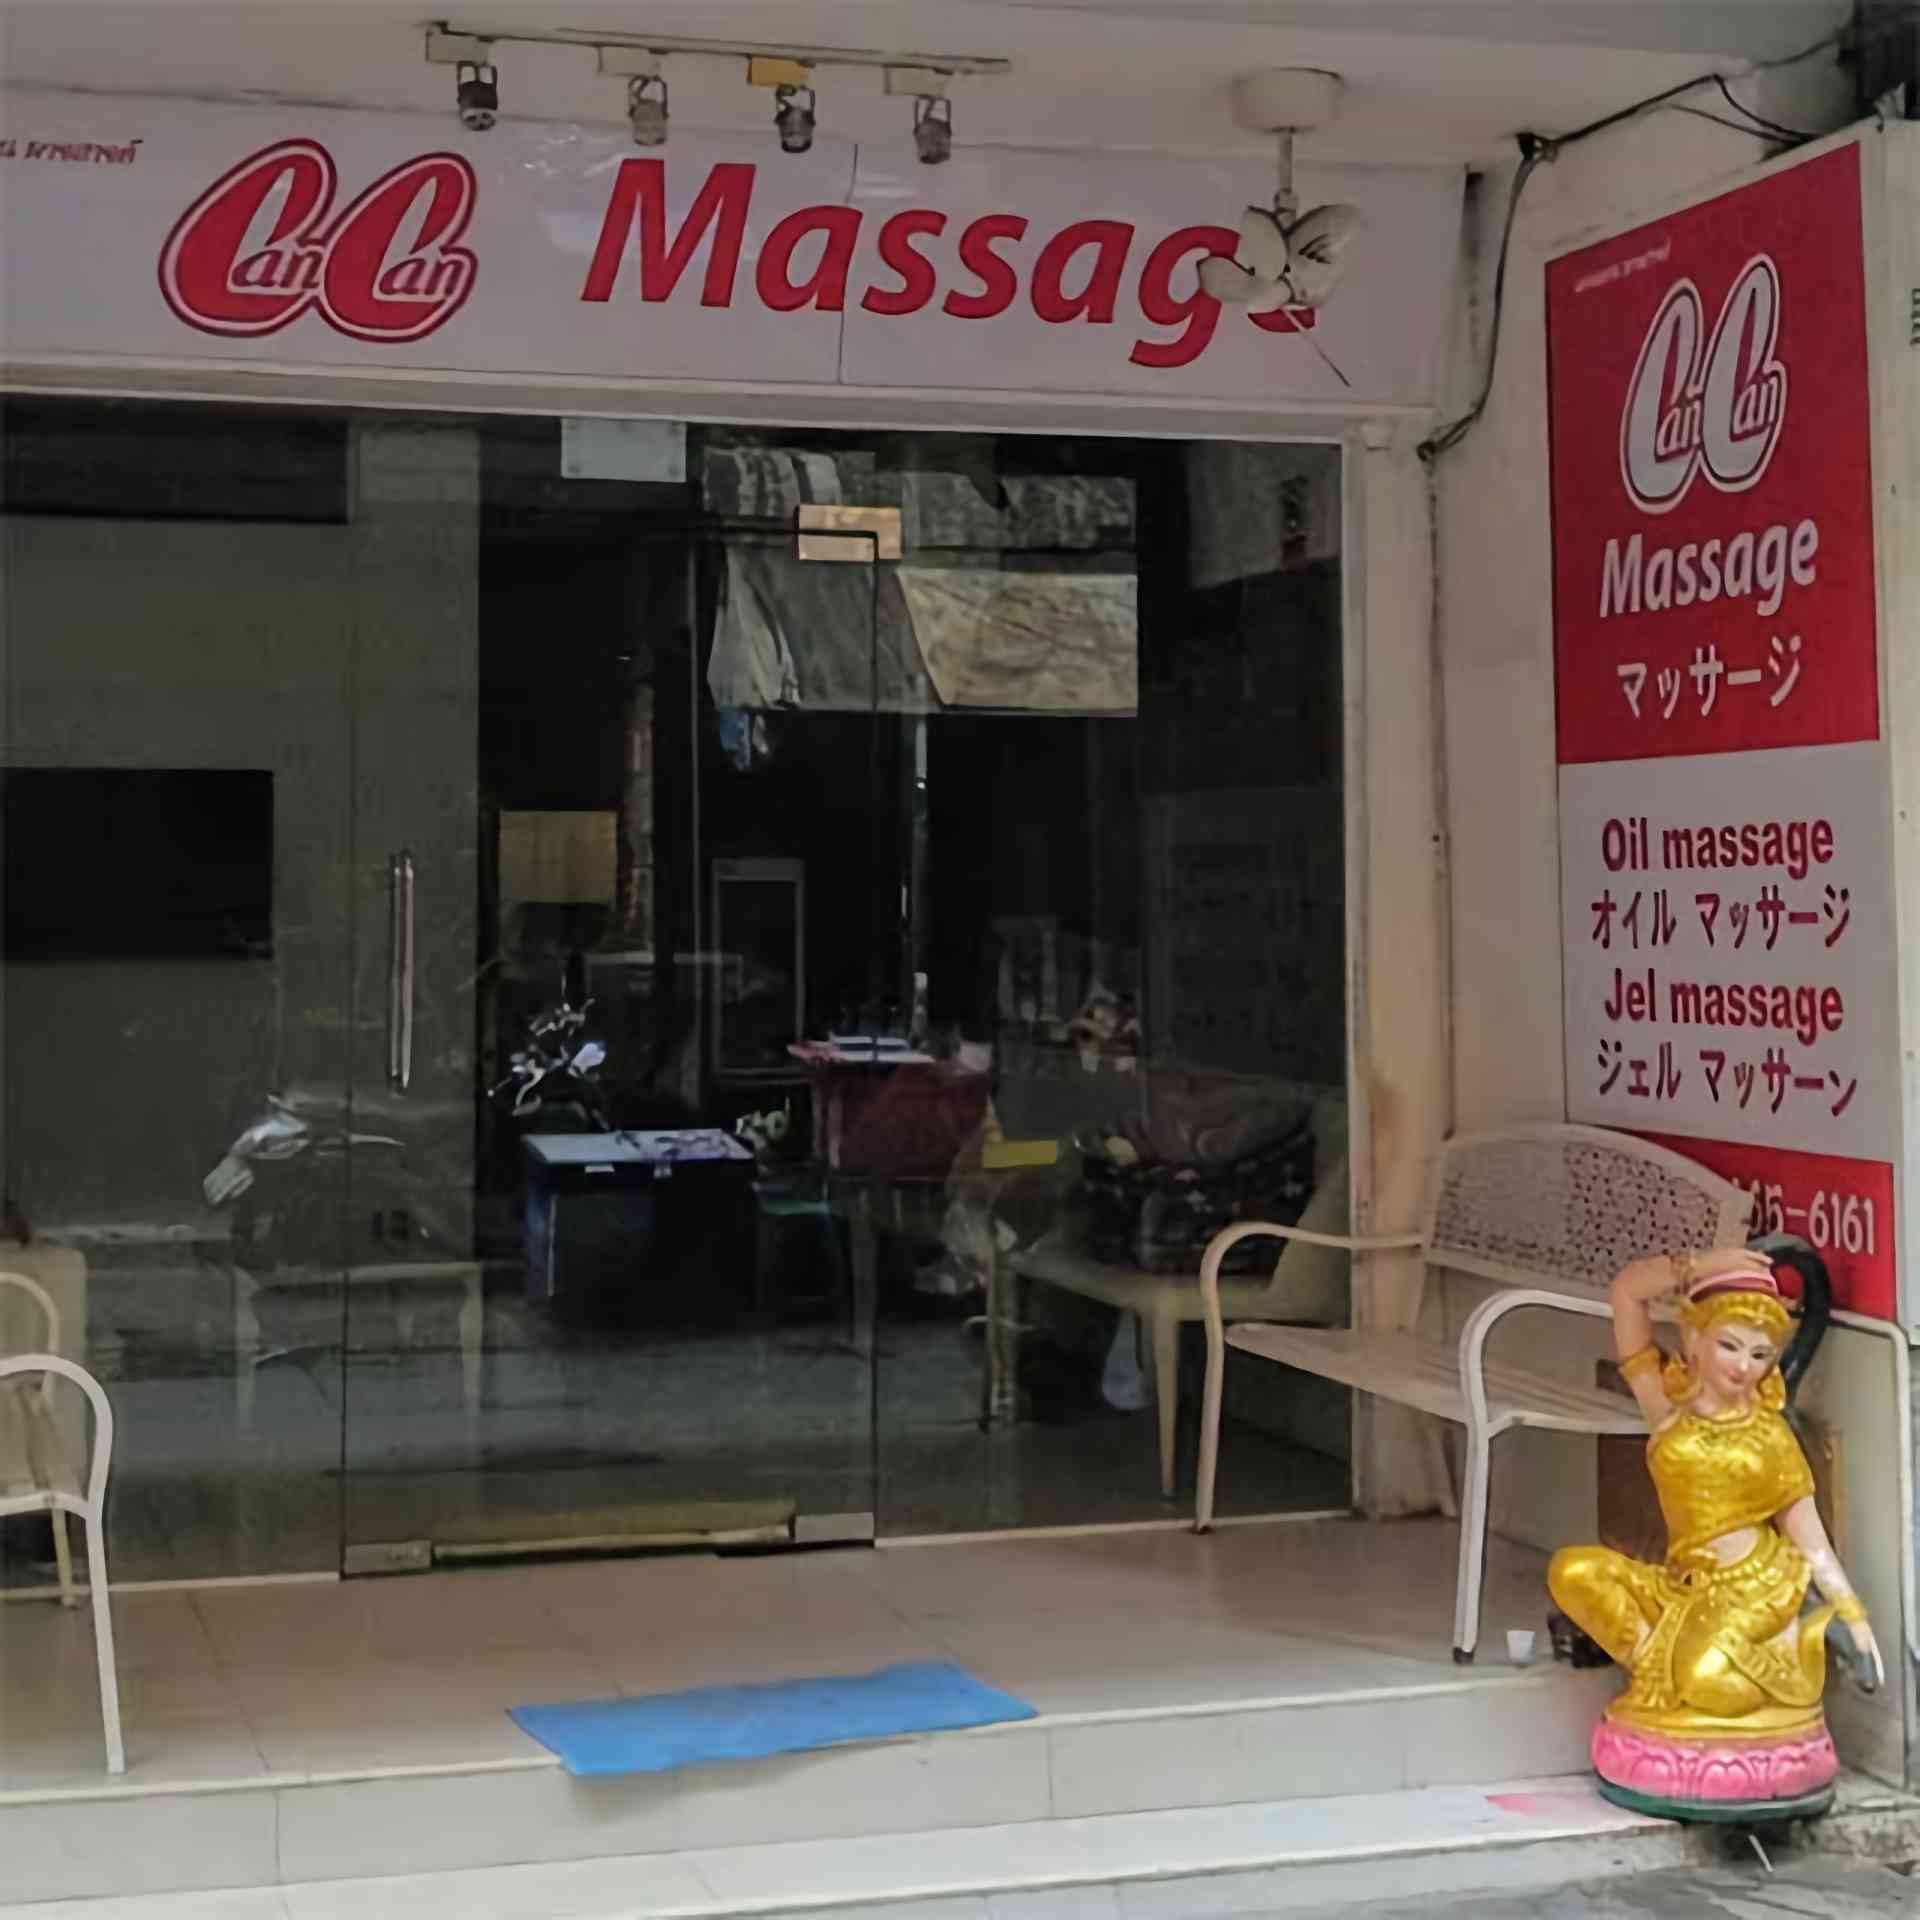 cancam massage